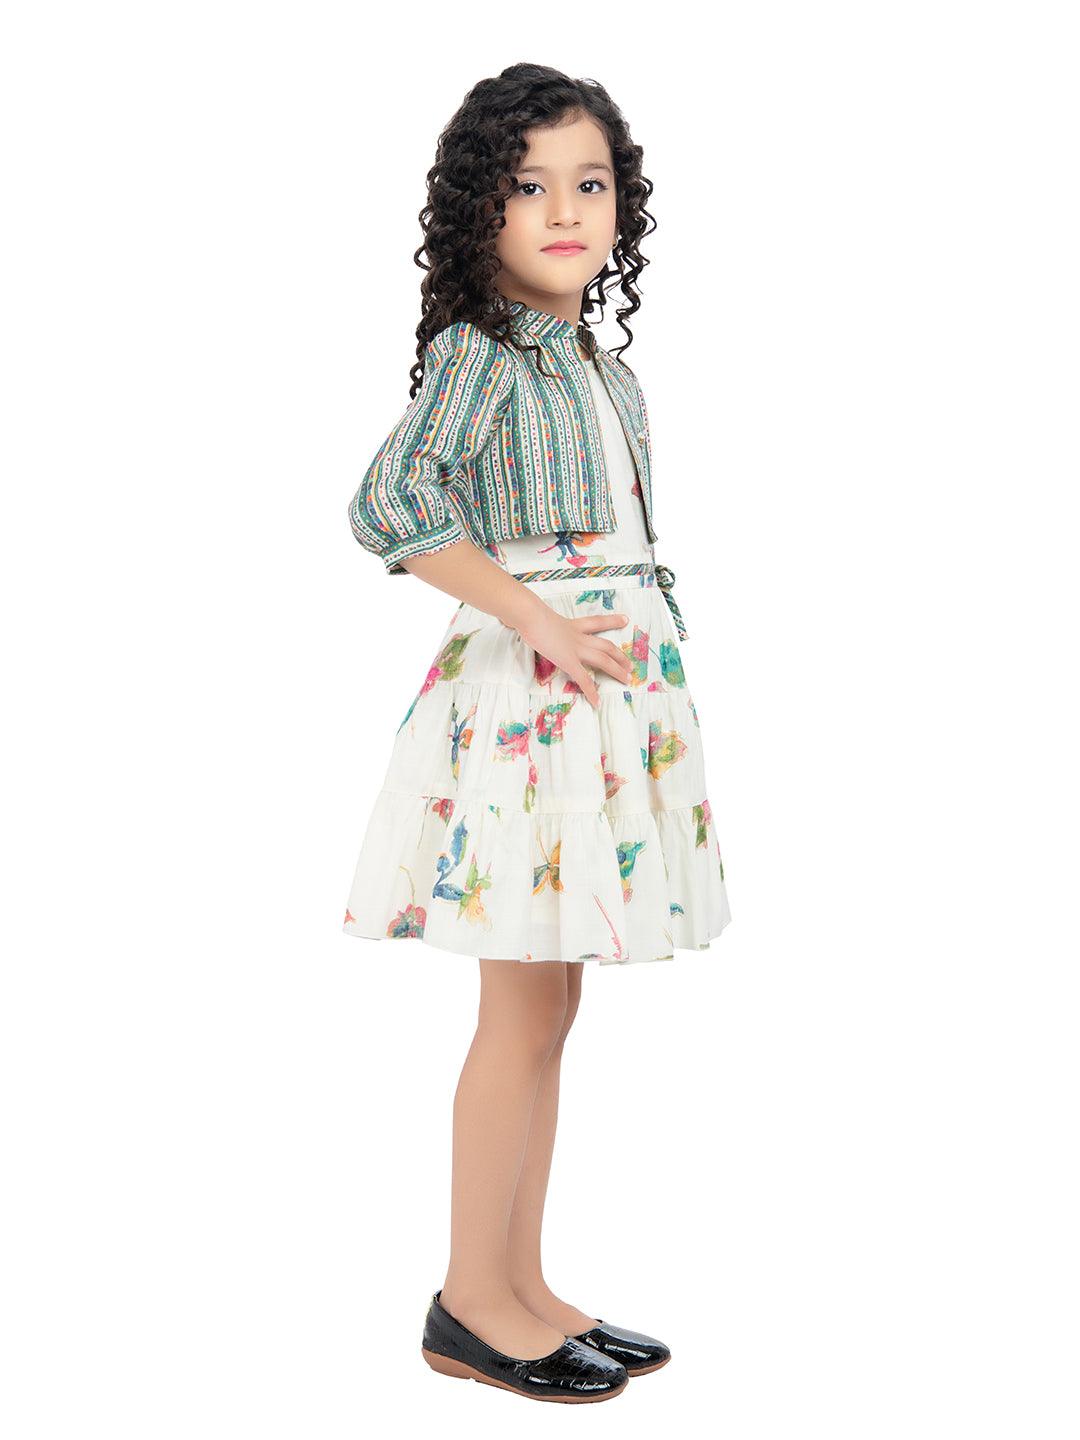 Tiny Baby Cream Colored Dress - 2152 Cream - TINY BABY INDIA shop.tinybaby.in